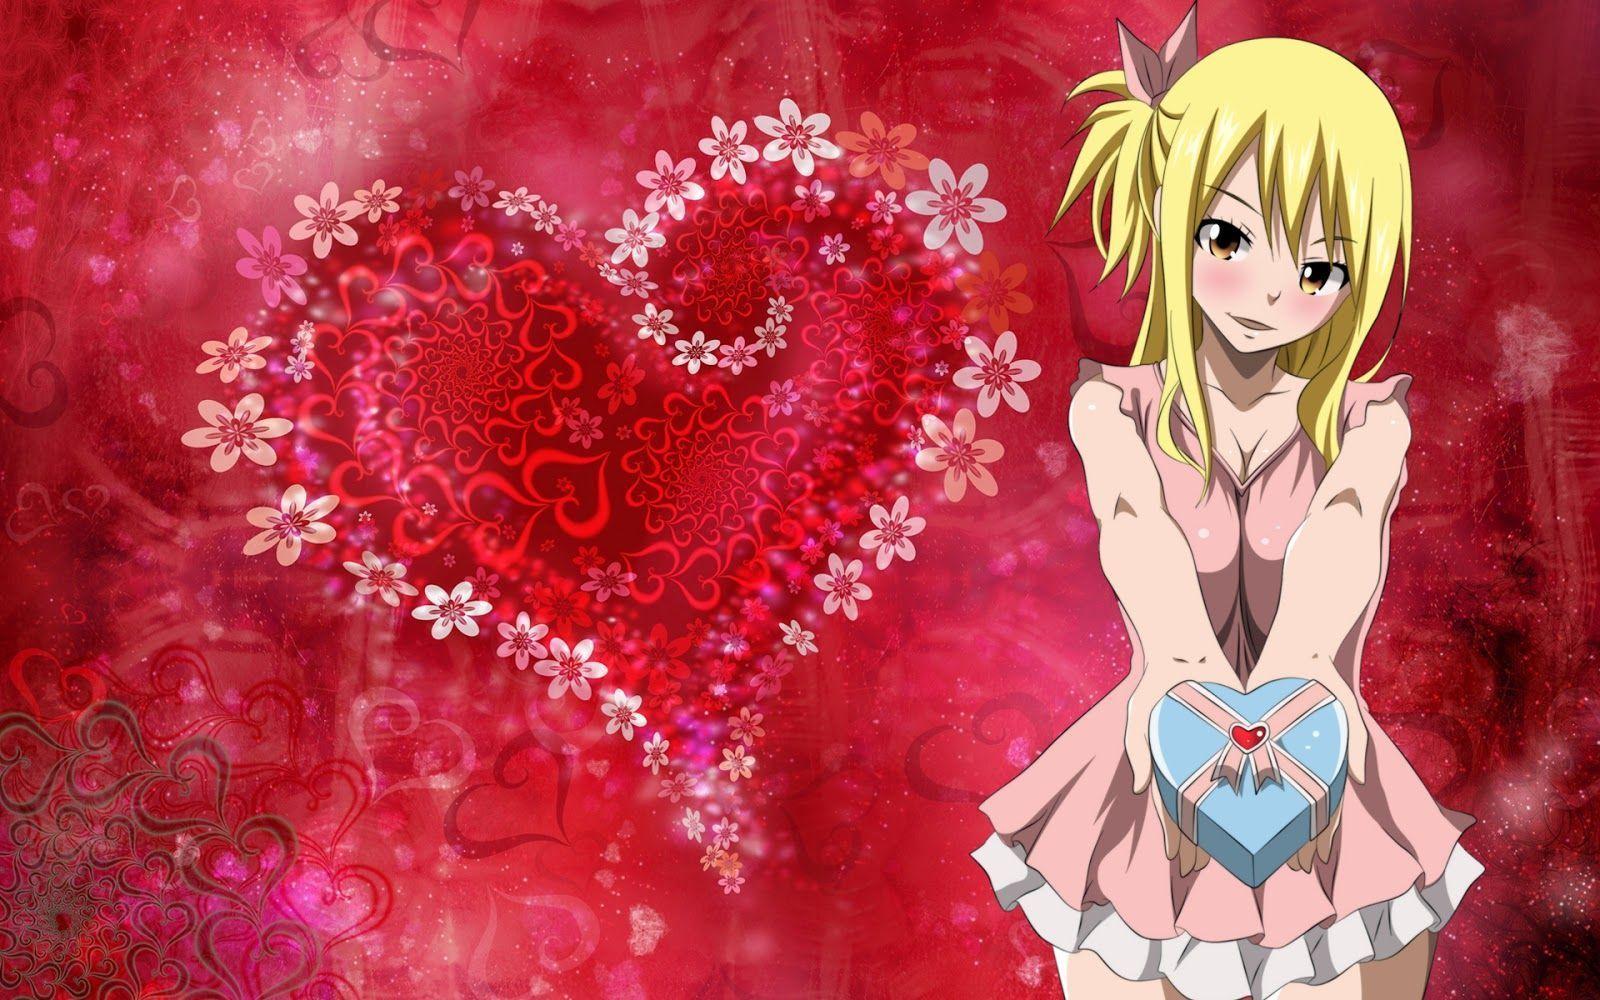 Lucy Heartfilia (anime character)